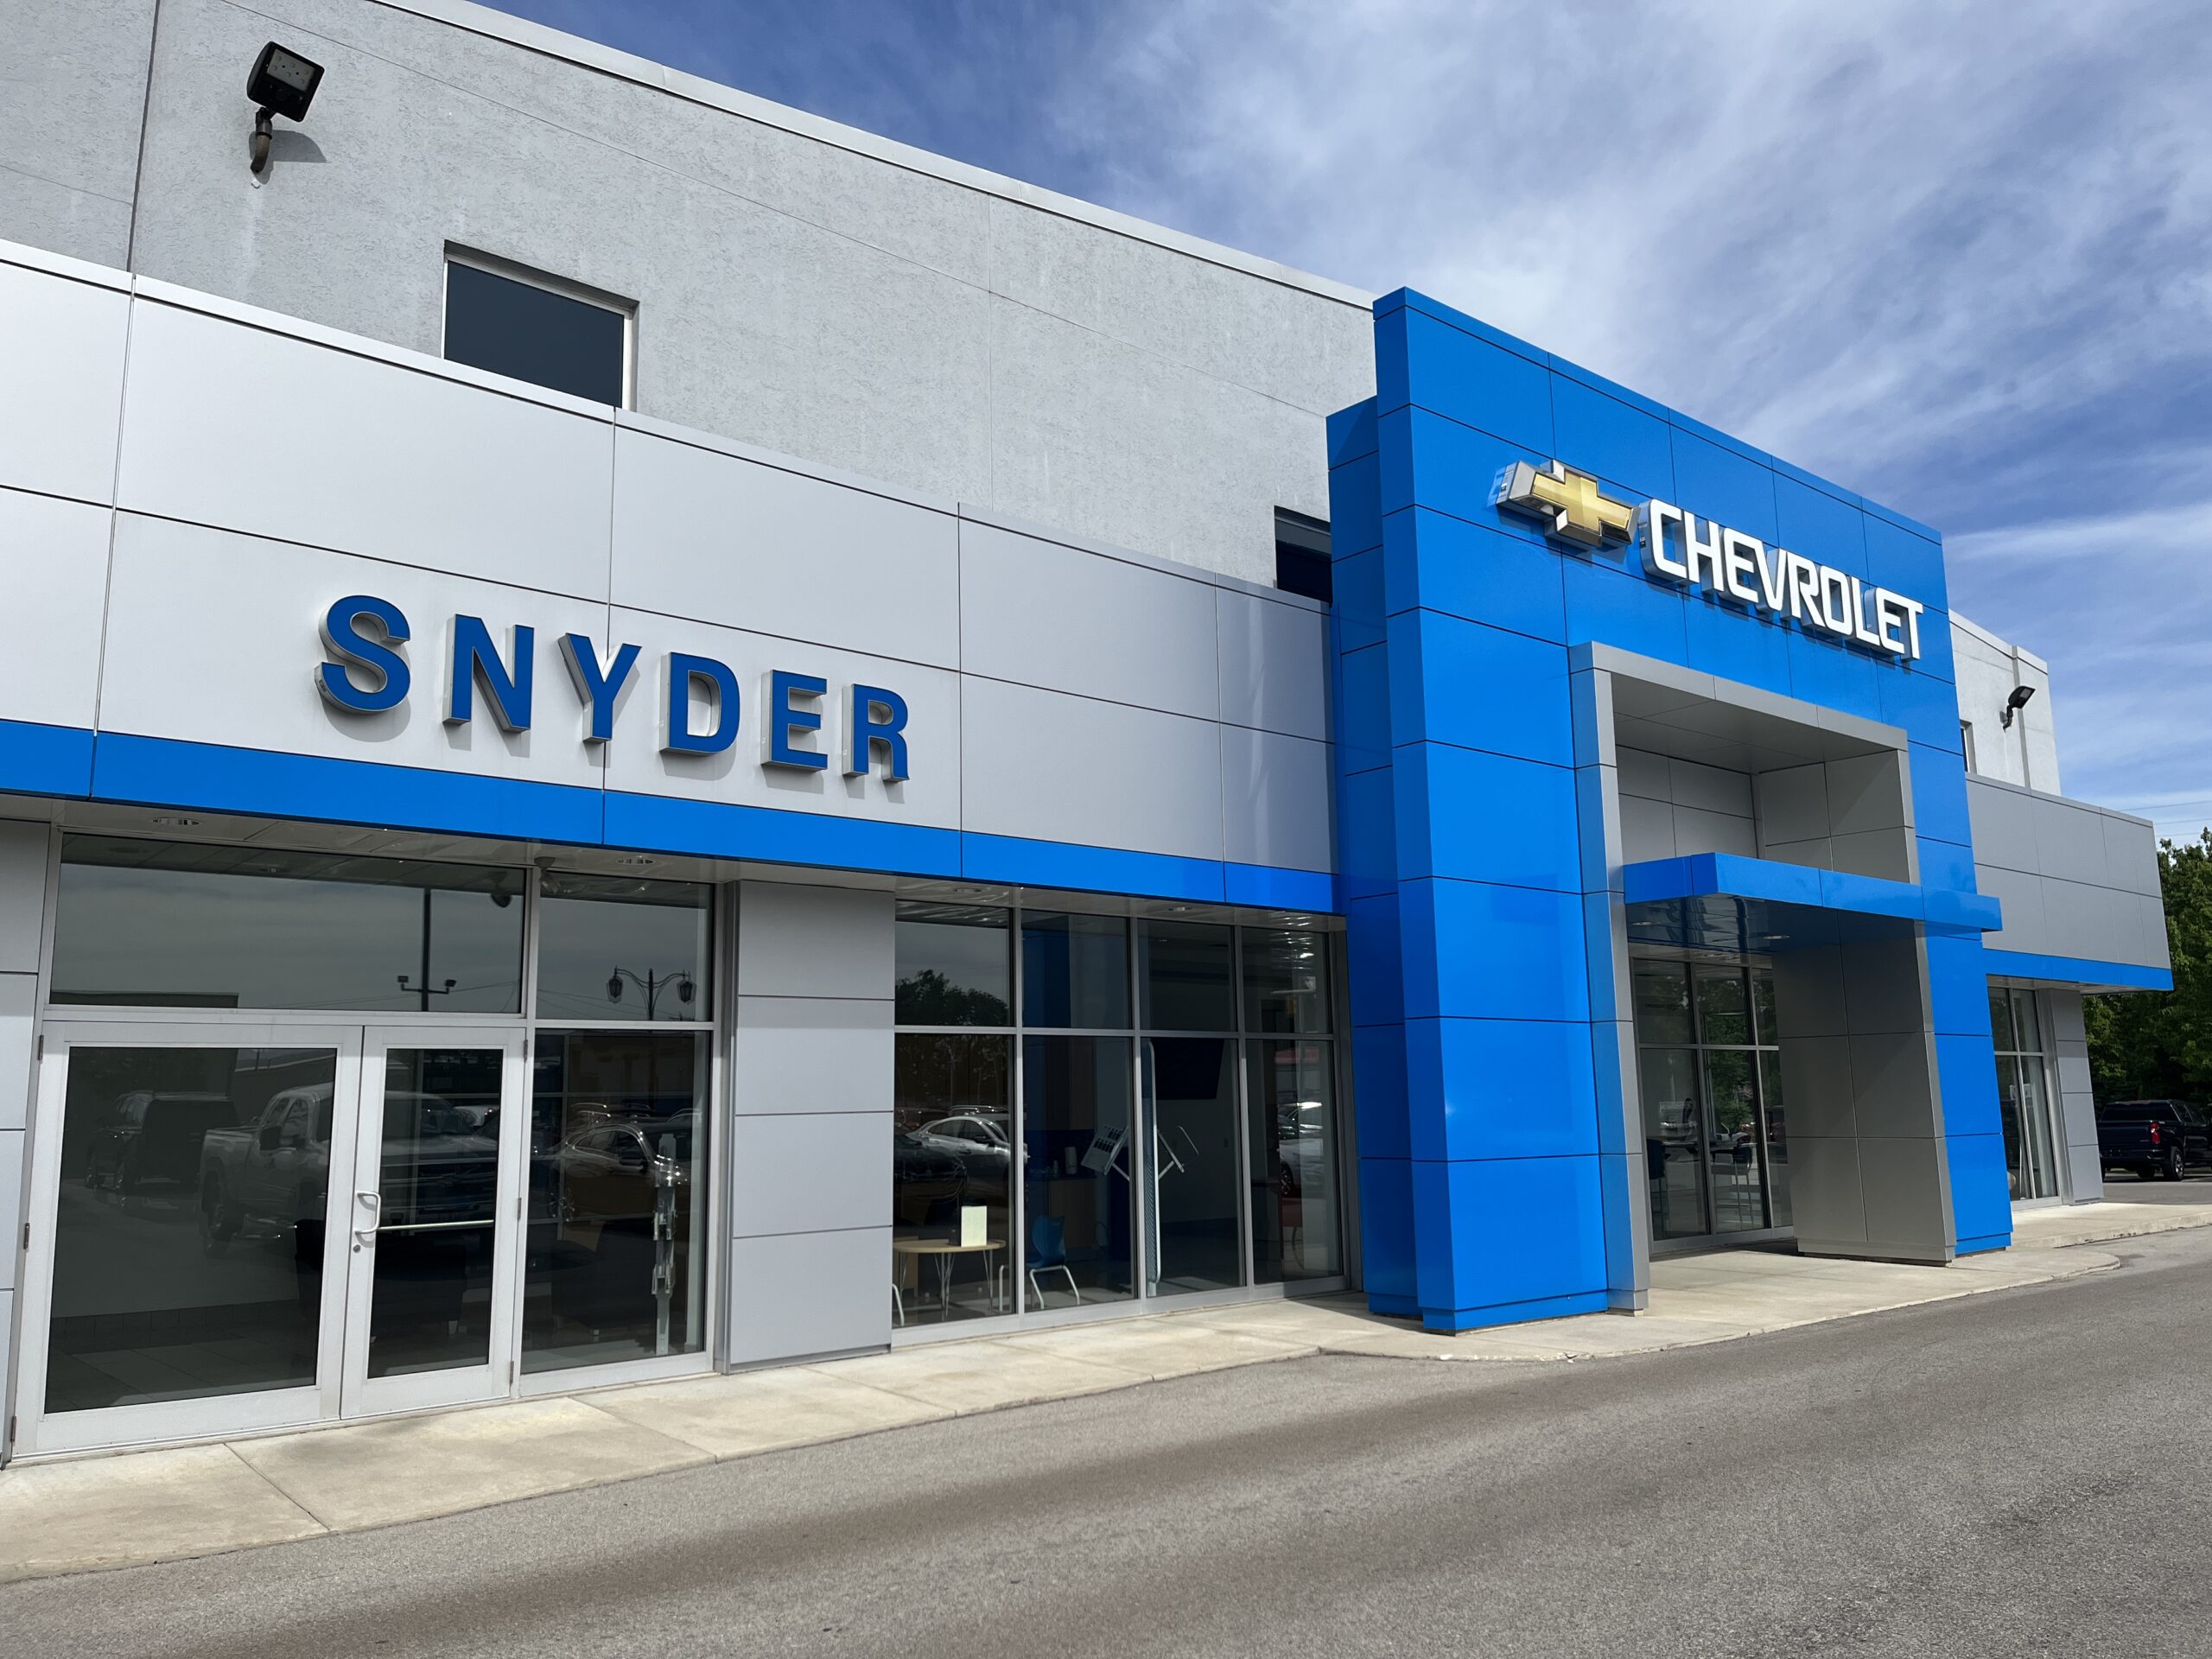 Snyder Chevrolet